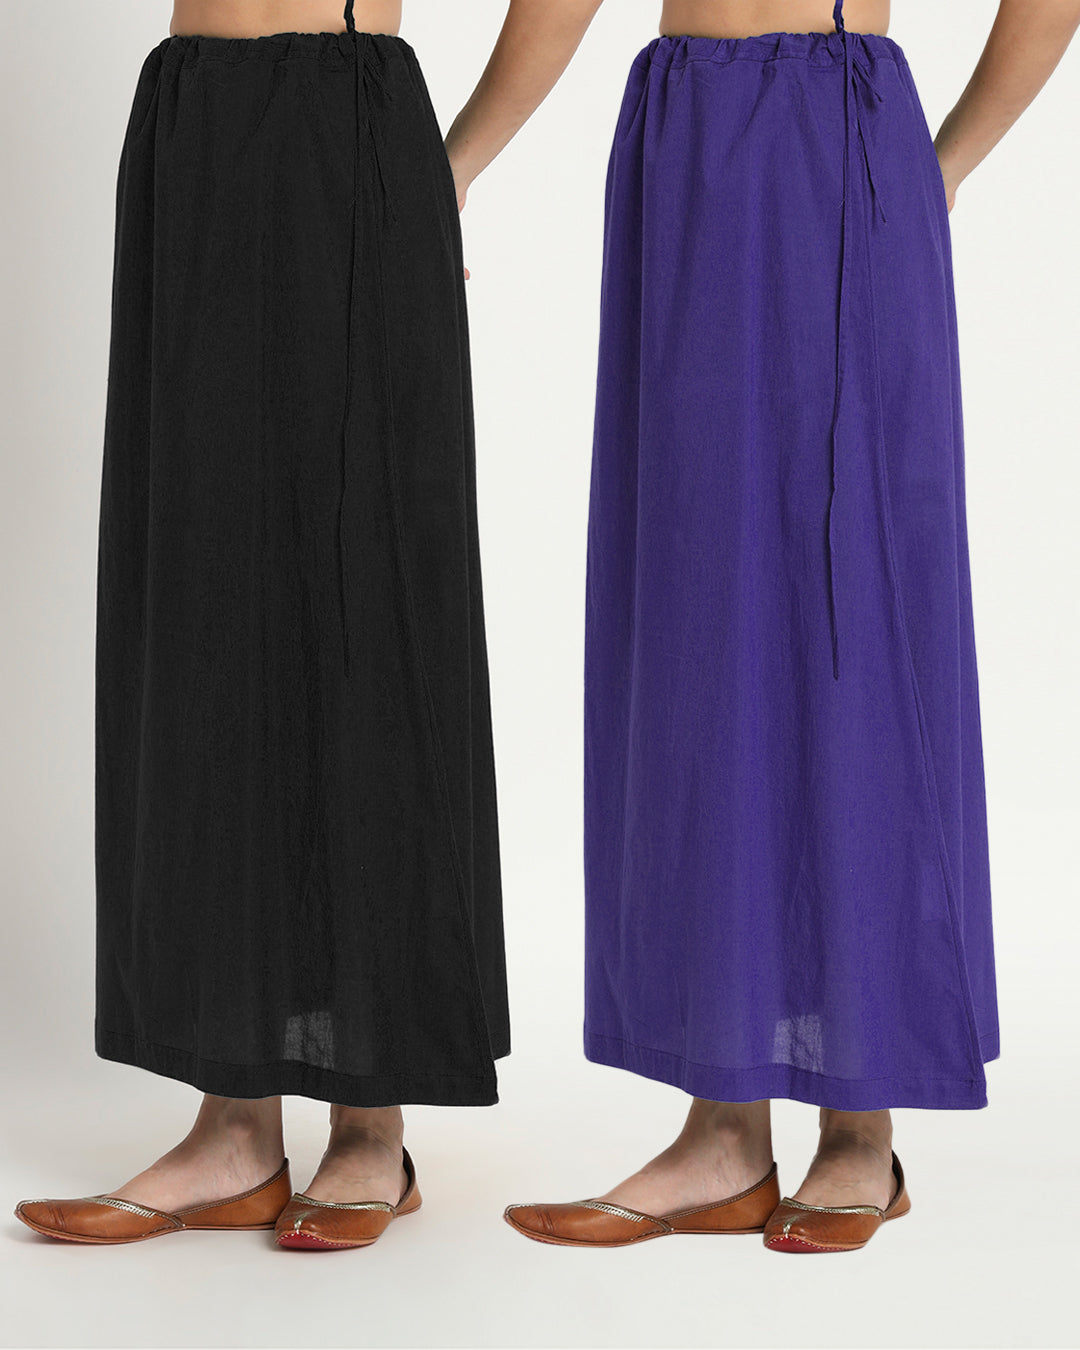 Combo: Black & Aurora Purple Peekaboo Petticoat- Set of 2